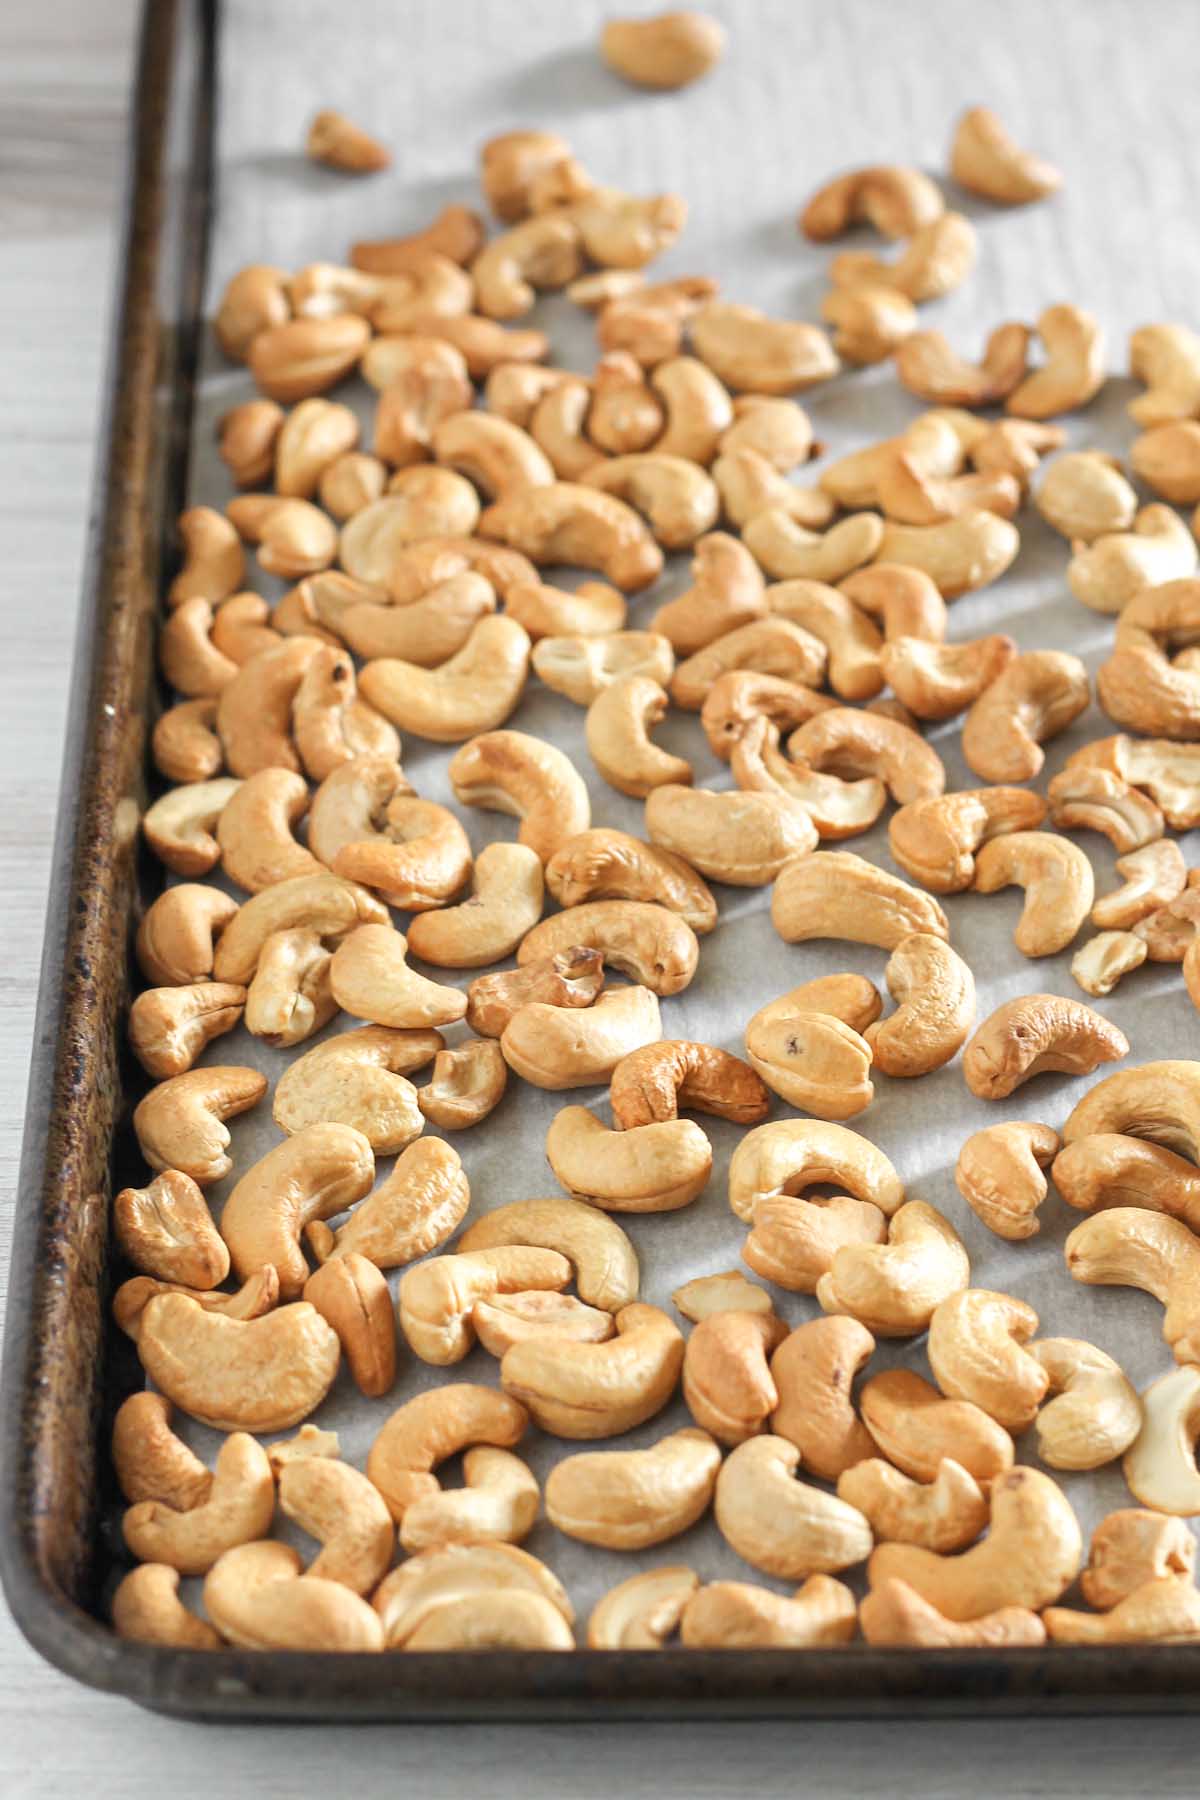 Roasted cashews on a vintage baking sheet.